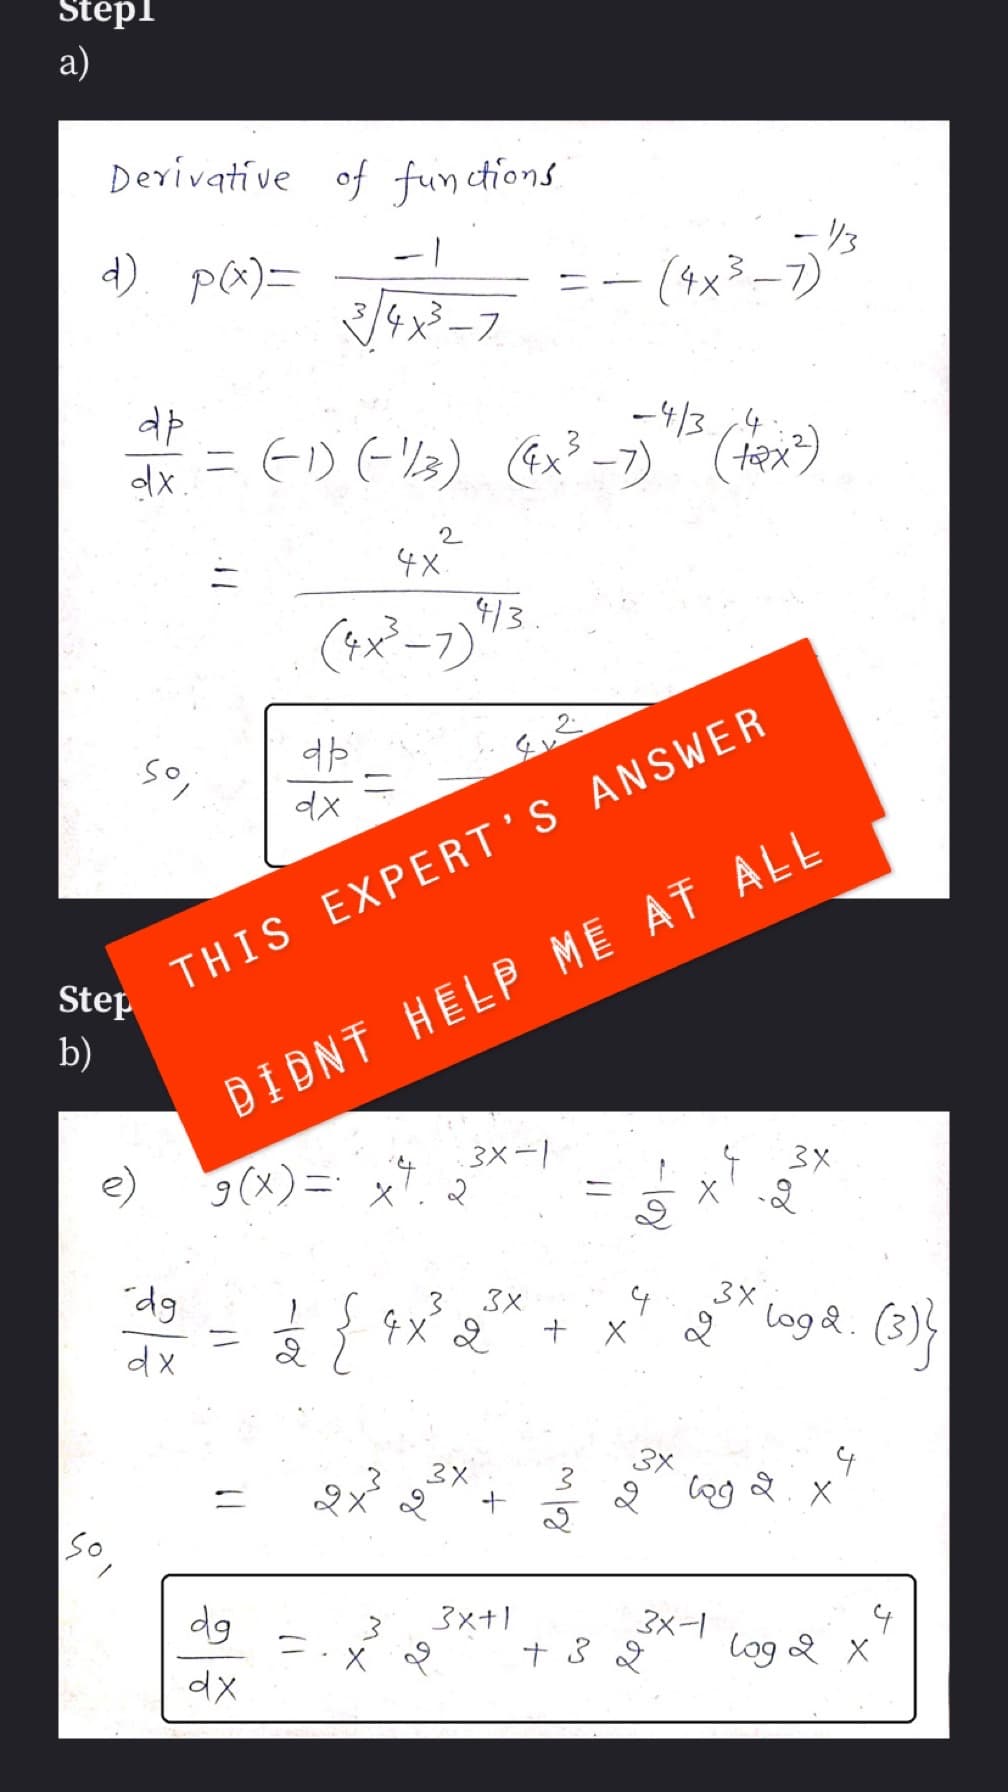 Step1
a)
Derivative of functions.
d). p(x)=
dp
dx.
Step
b)
50,
so,
=
dg
dx
dg
dx
dp
-1
3√4x³-7
dx
(-1) (-1/3) (4x³-7)
4x.
(4x³-7)
2
=
4/3
ملاقے
DIDNT HELP ME AT ALL
g(x) = x + 2
२
2 { 4 x ³² 2²
--
جسم
THIS EXPERT'S ANSWER
3X-1
3x
3x
+
3x+1
-4/3/4
3/8
(4x³-7)
11
- 108.
G
+
3x
mor
+ 3 2
3 (tax²)
x
- 1/3
2
3x-1
3X
-2
log 2
نیا هم
logd. (3)}
X
log 2 x
4